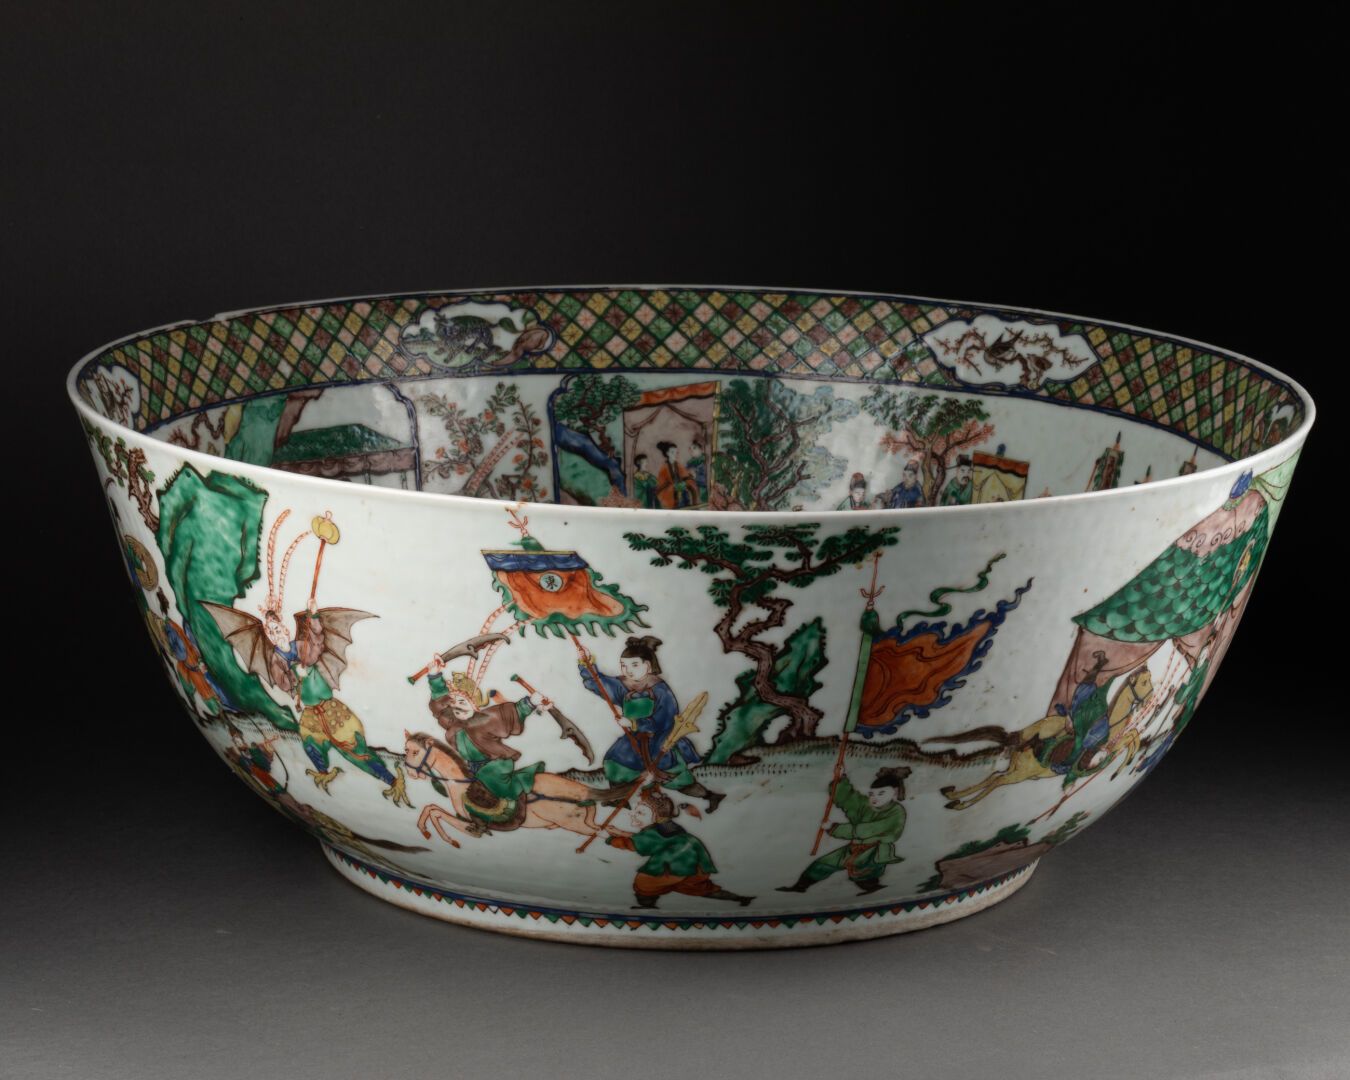 CHINE - XIXe siècle 重要的PUNCH BOWL，装饰有政要的场景

绿色家族的瓷器和多色珐琅器

闪闪发光